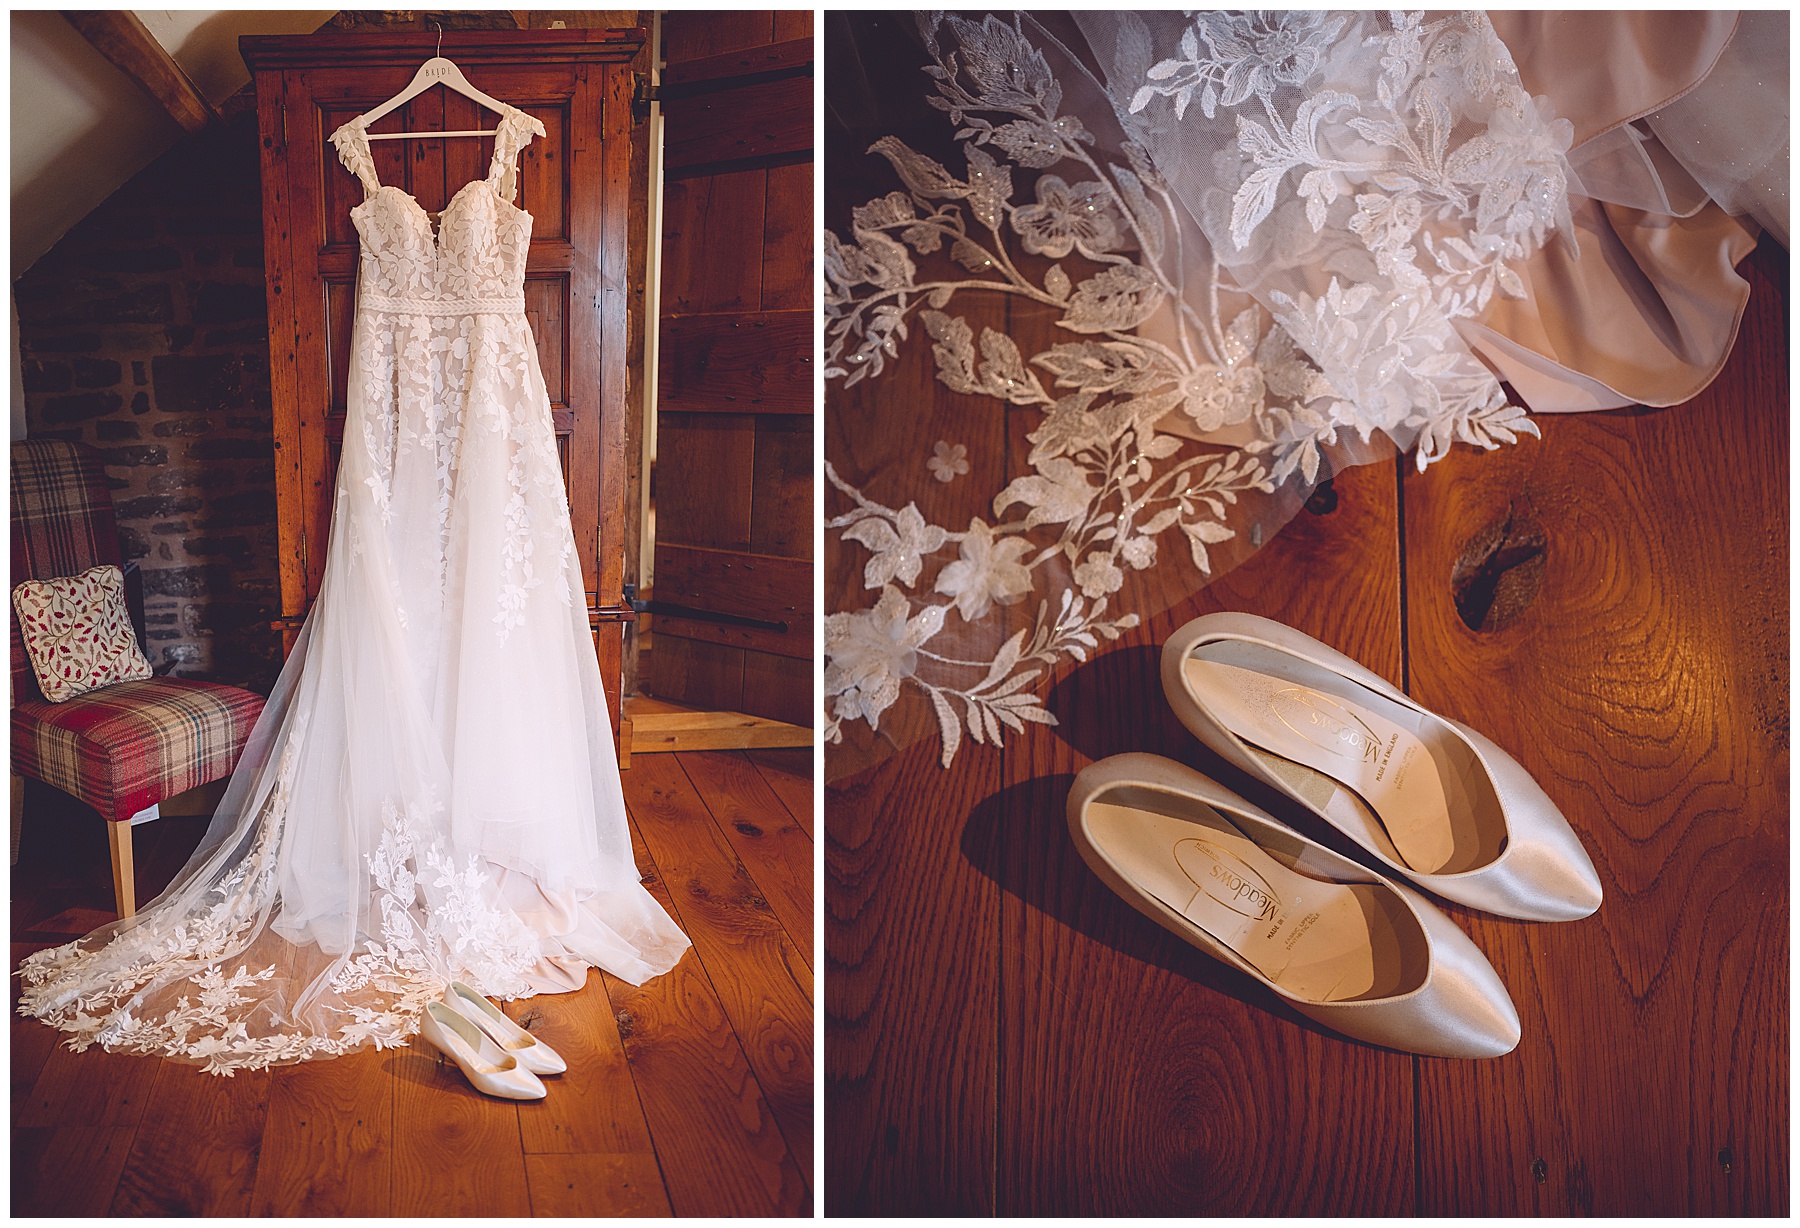 Wedding Dress & Wedding Shoes